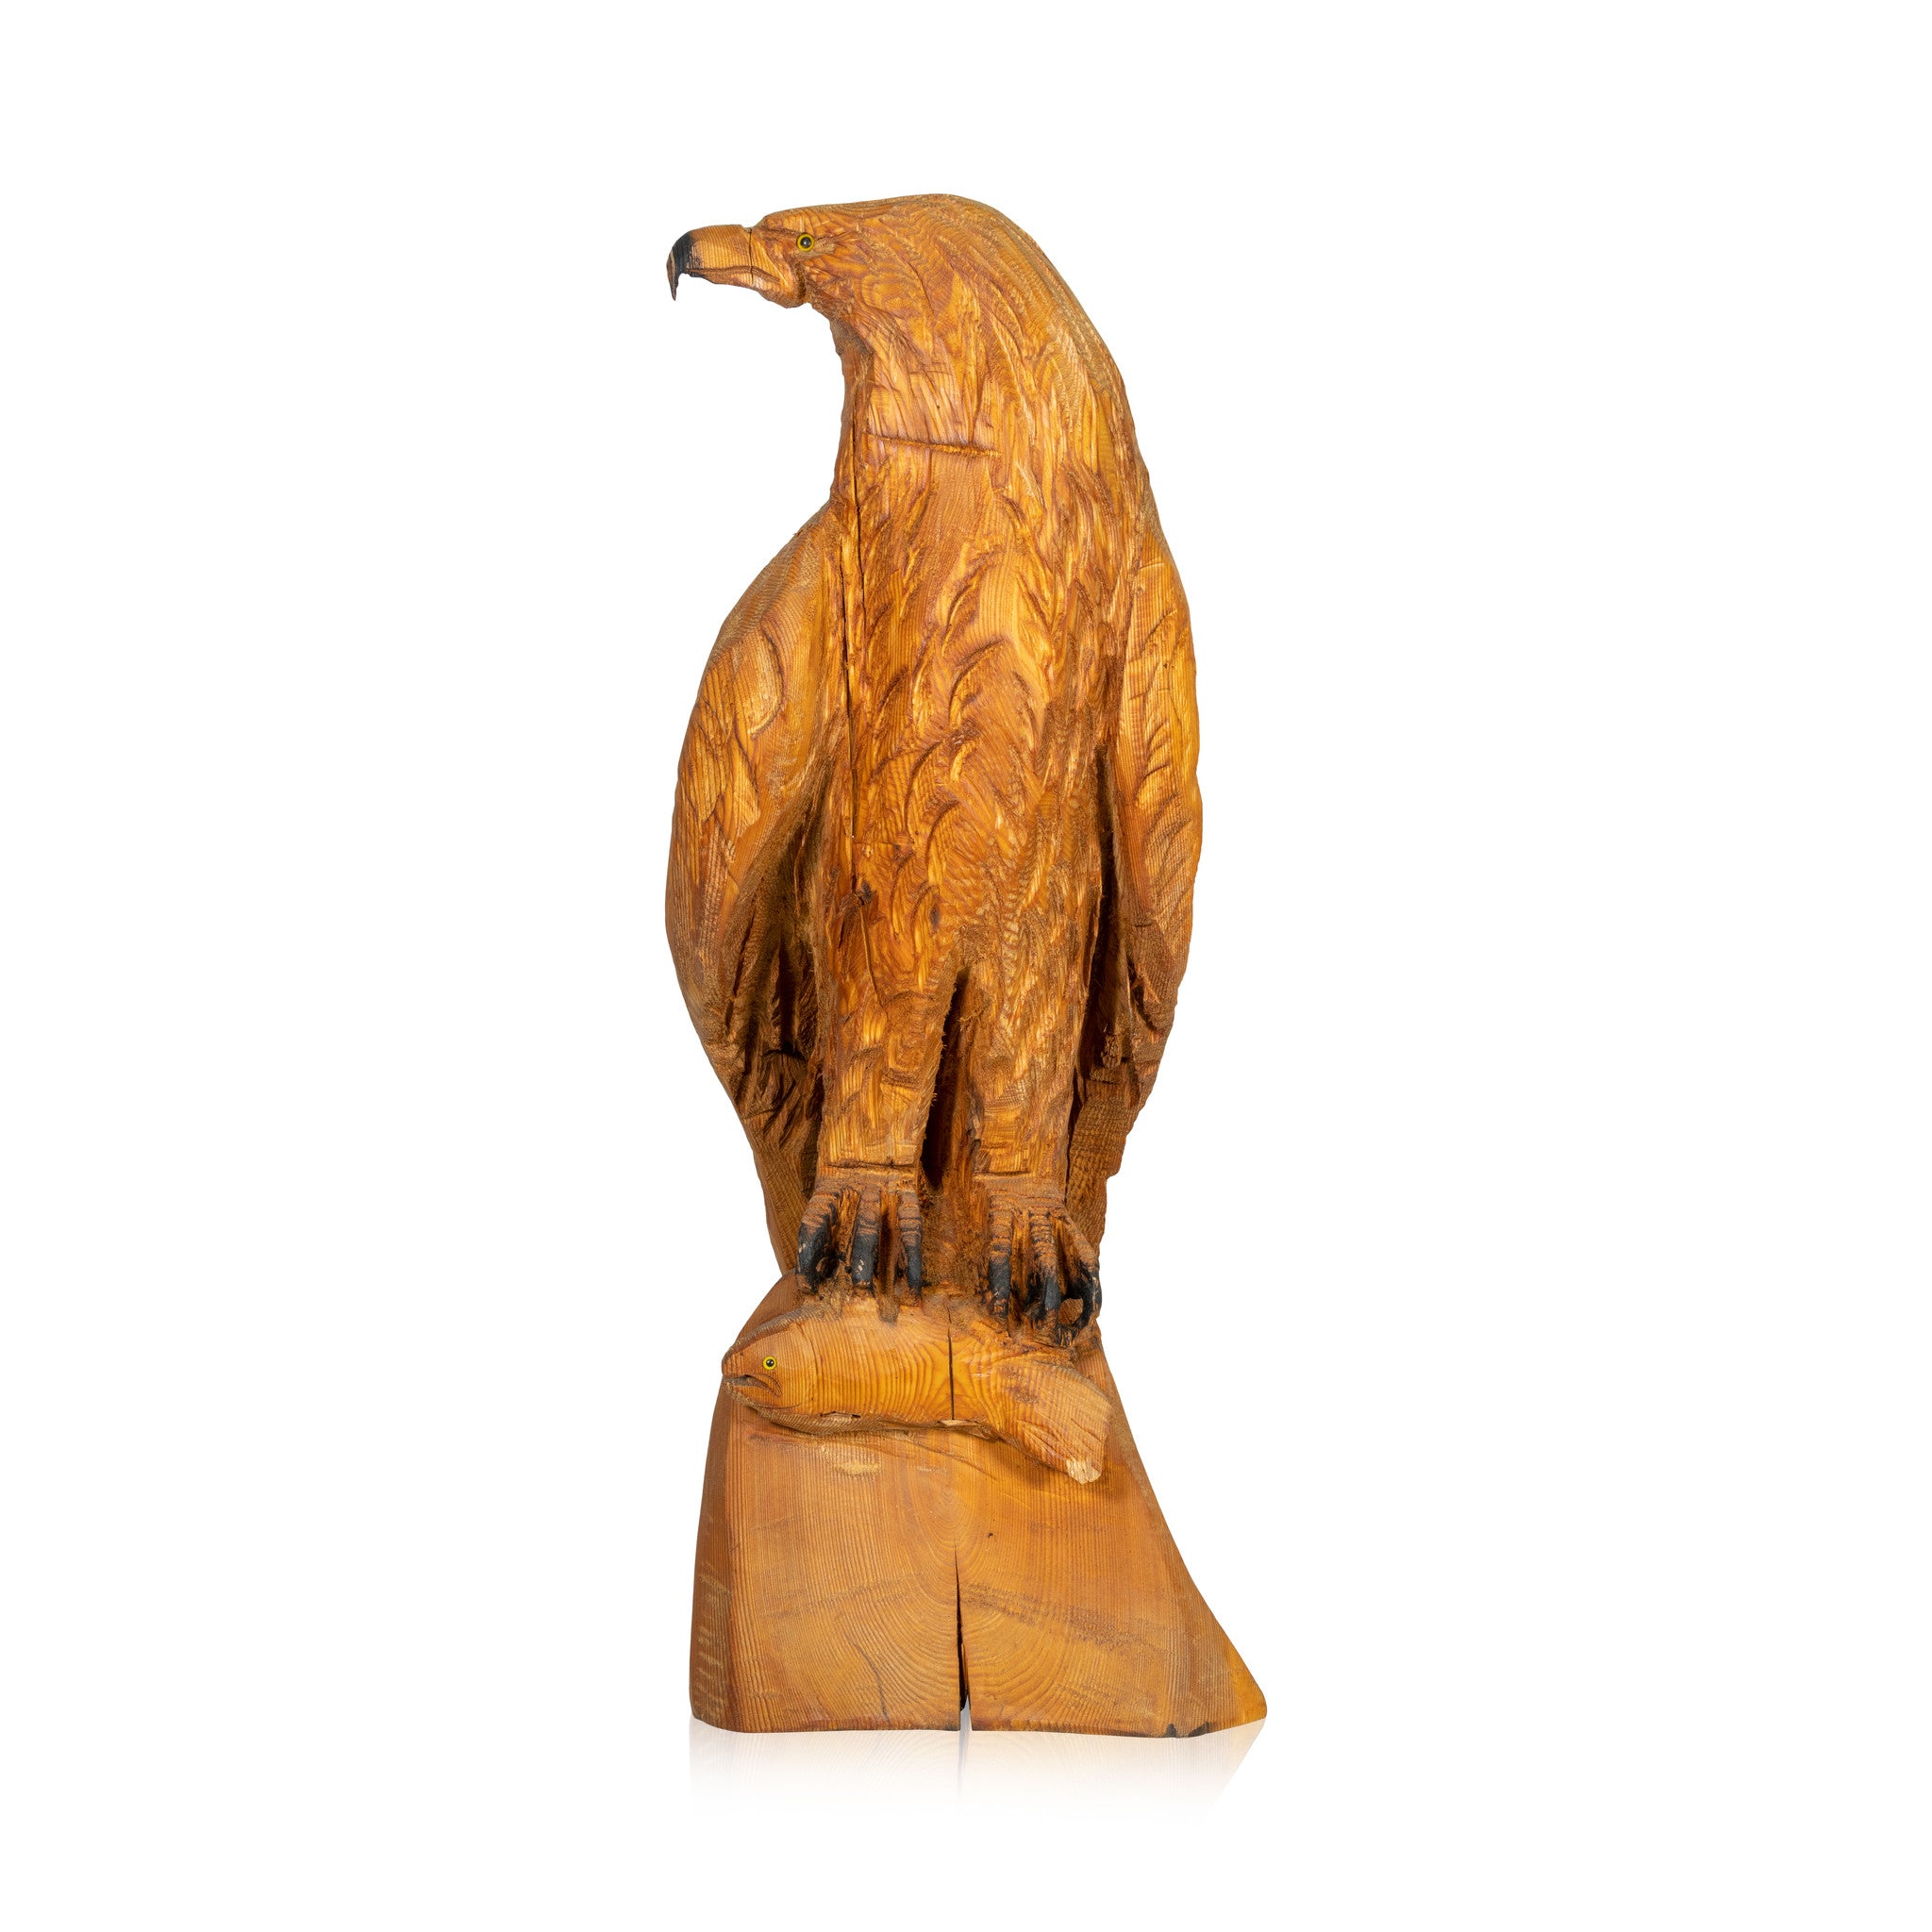 Eagle with Fish Chainsaw Art, Furnishings, Decor, Folk Item